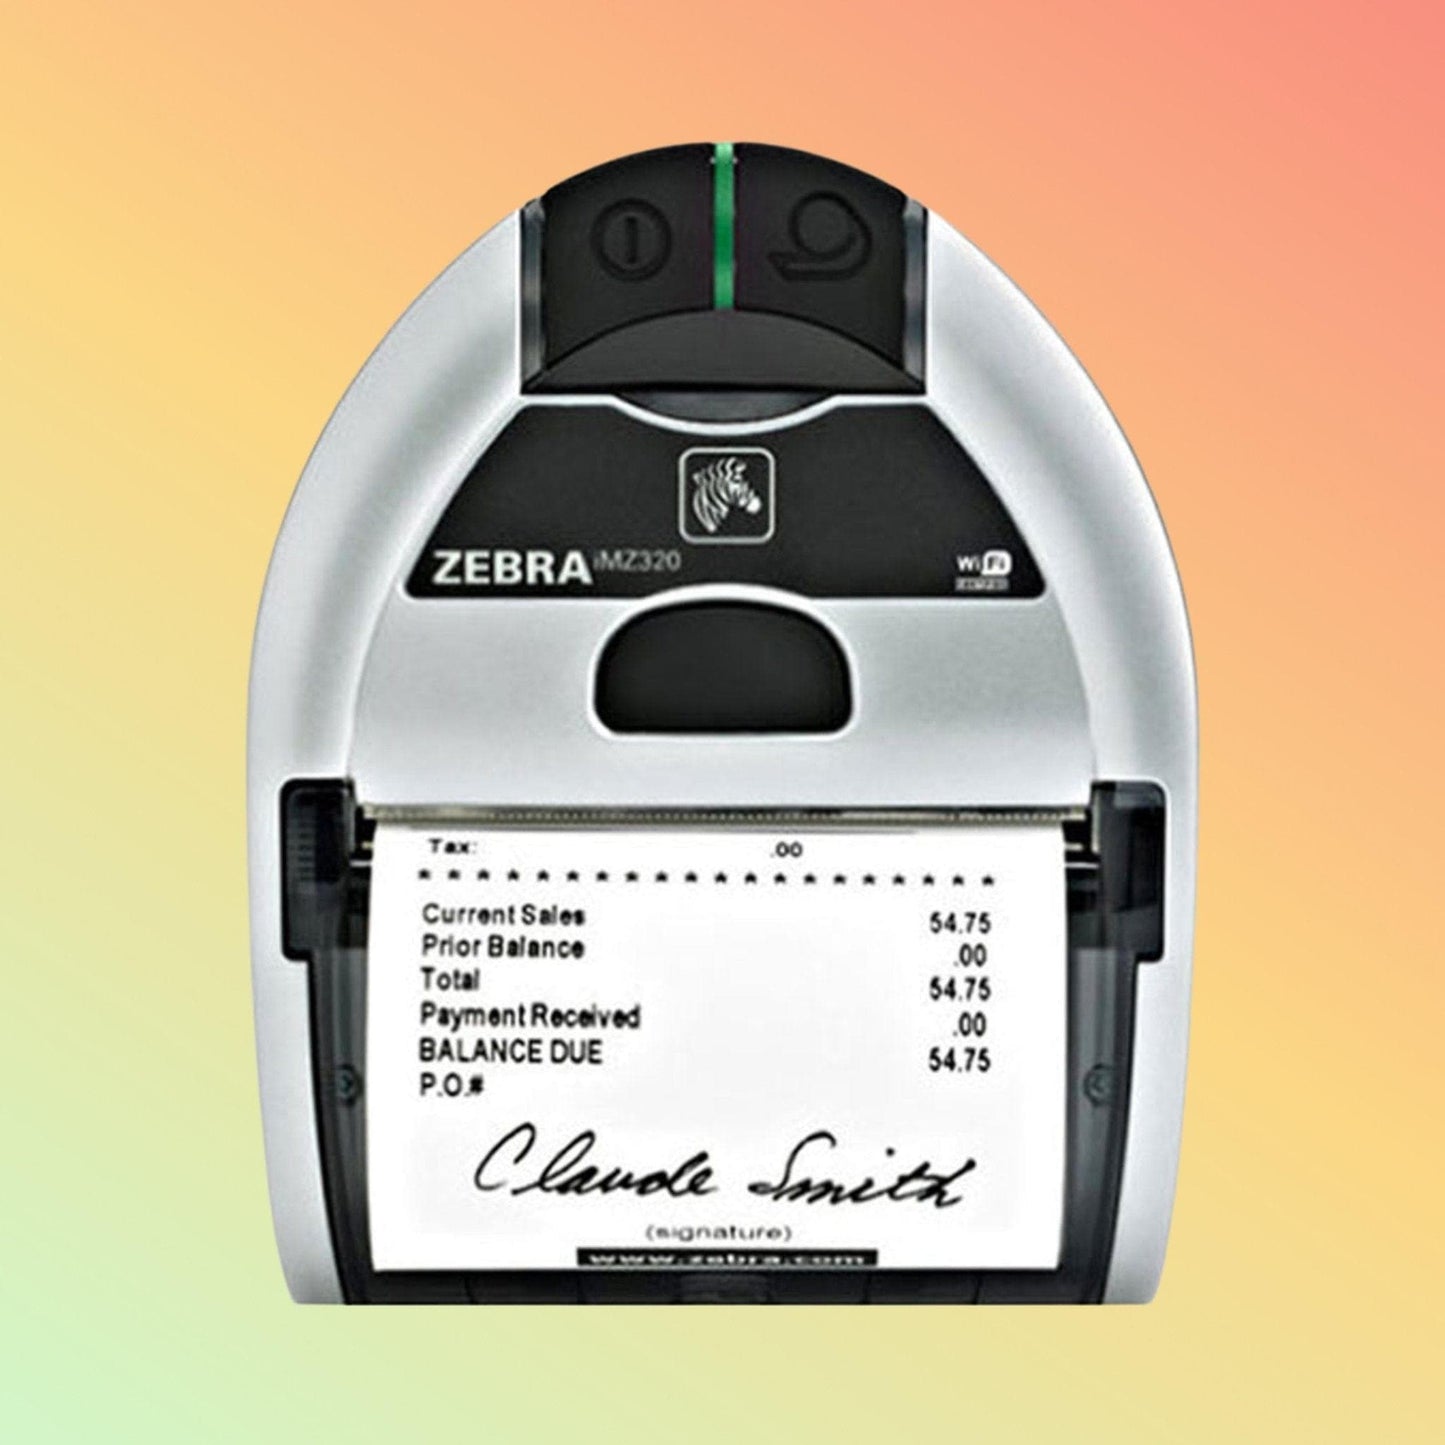 Mobile printer - Zebra iMZ-320 - Neotech